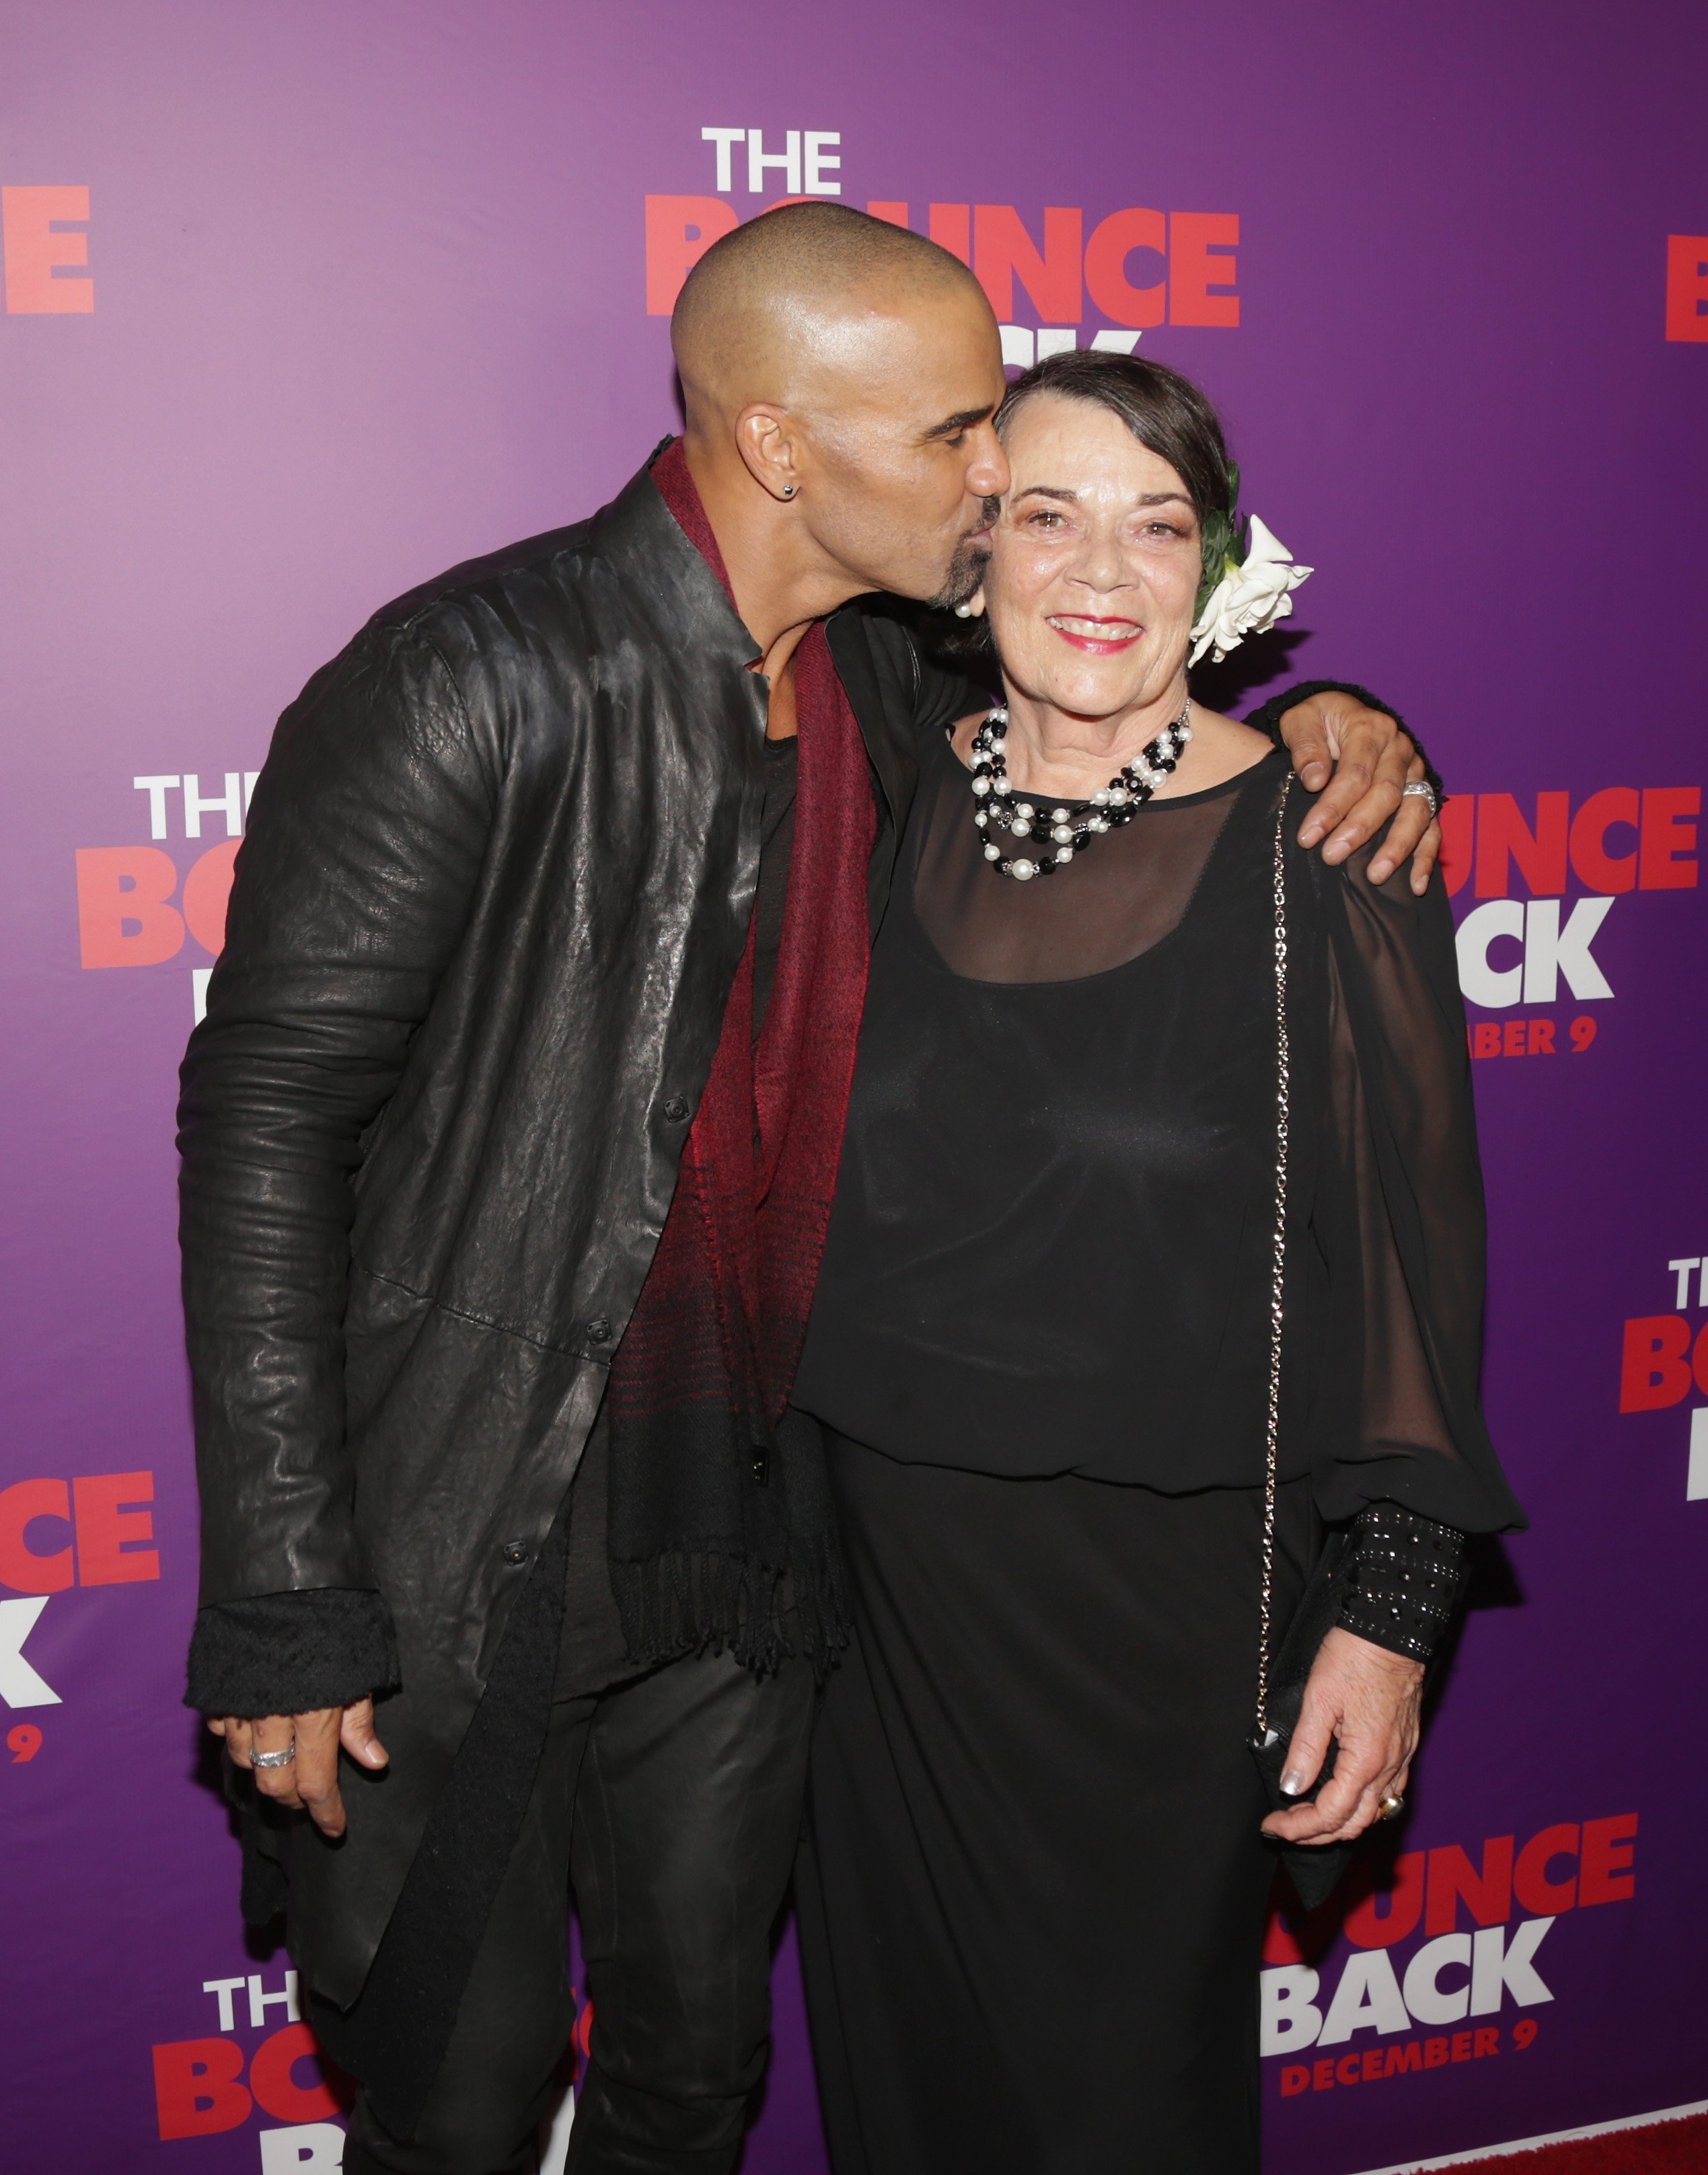 Shemar Moore und seine Mutter Marilyn Wilson bei der Premiere "The Bounce Back", 2016 | Quelle: Getty Images